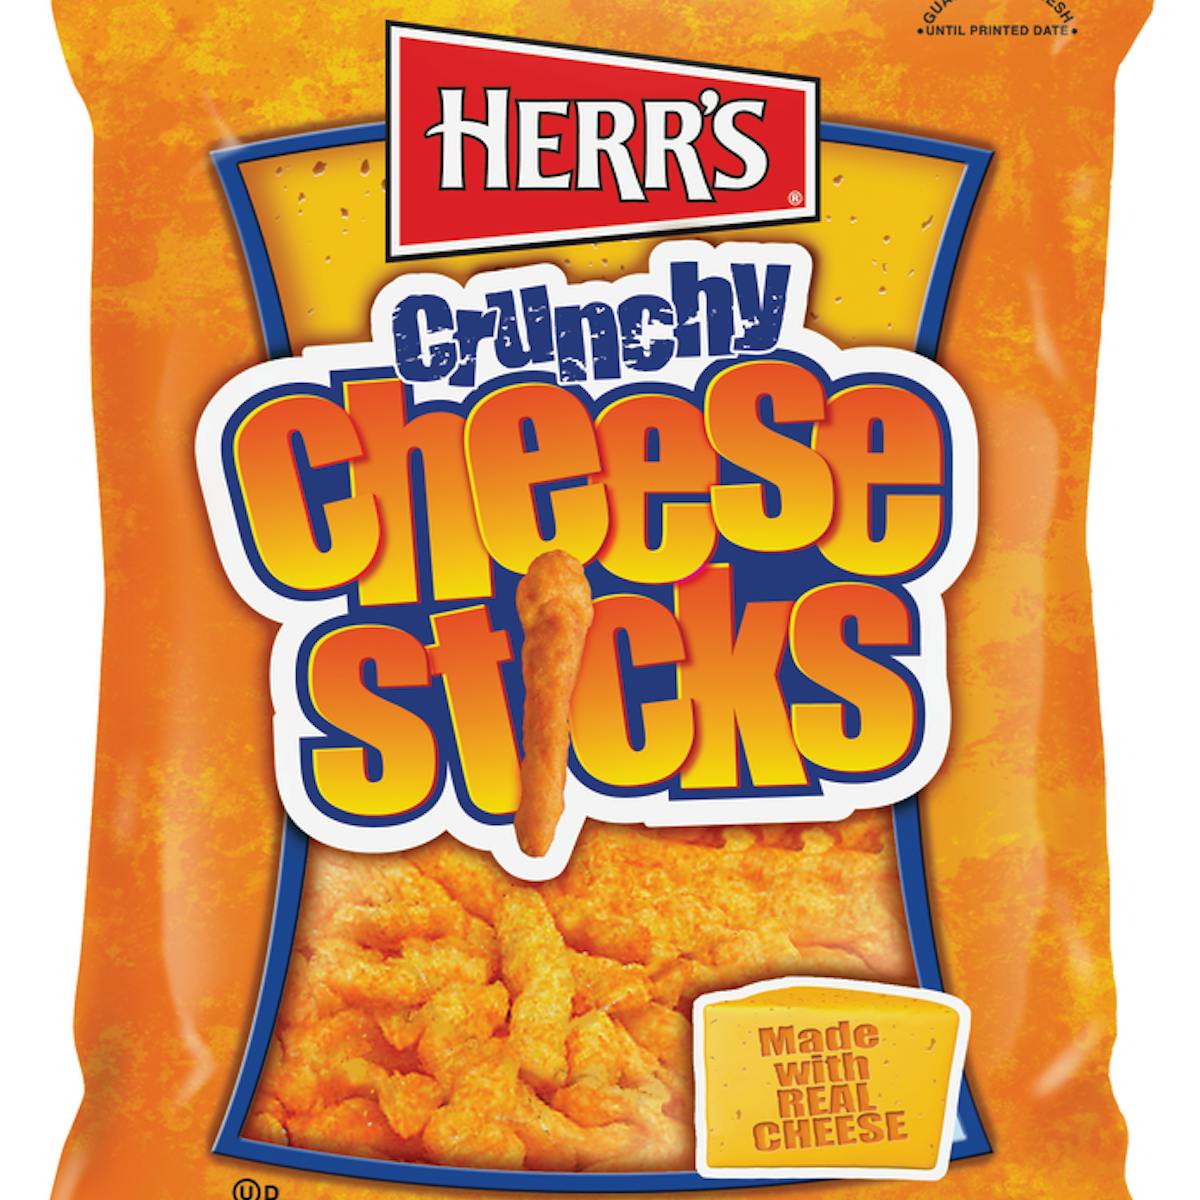 1 Oz Crunchy Cheese Sticks 5 10876432